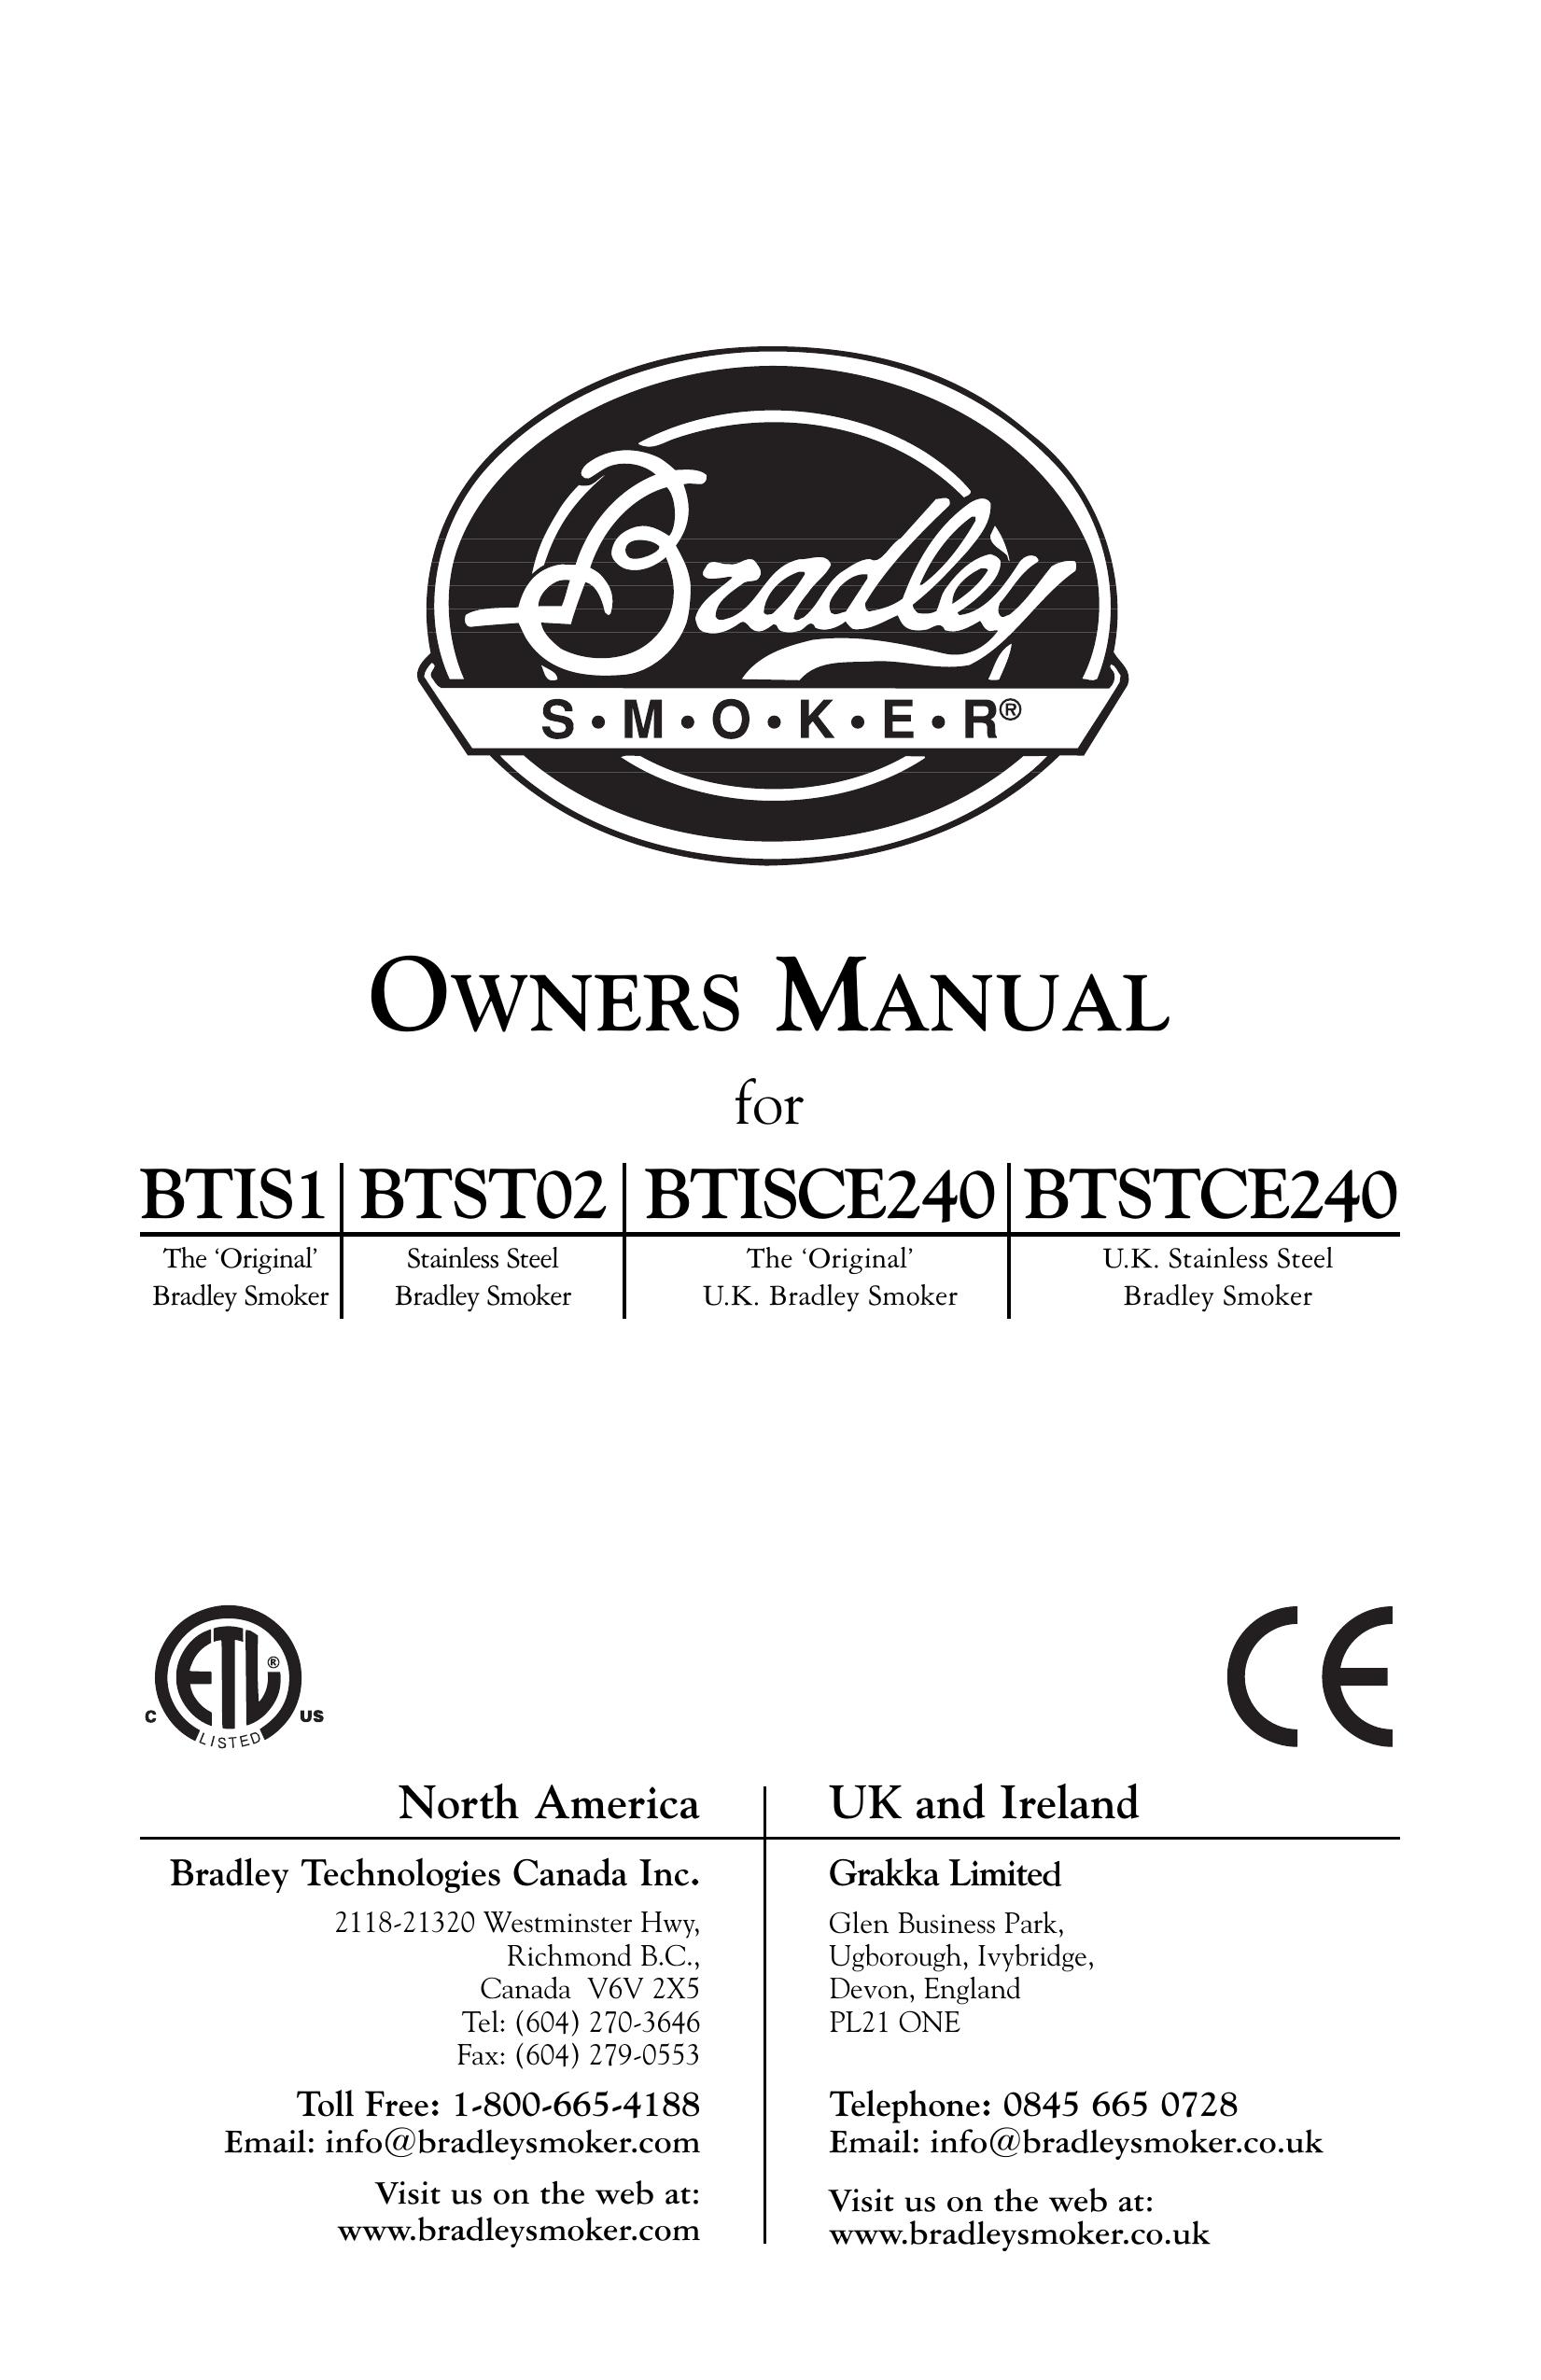 Bradley Smoker BTISCE240 Smoker User Manual